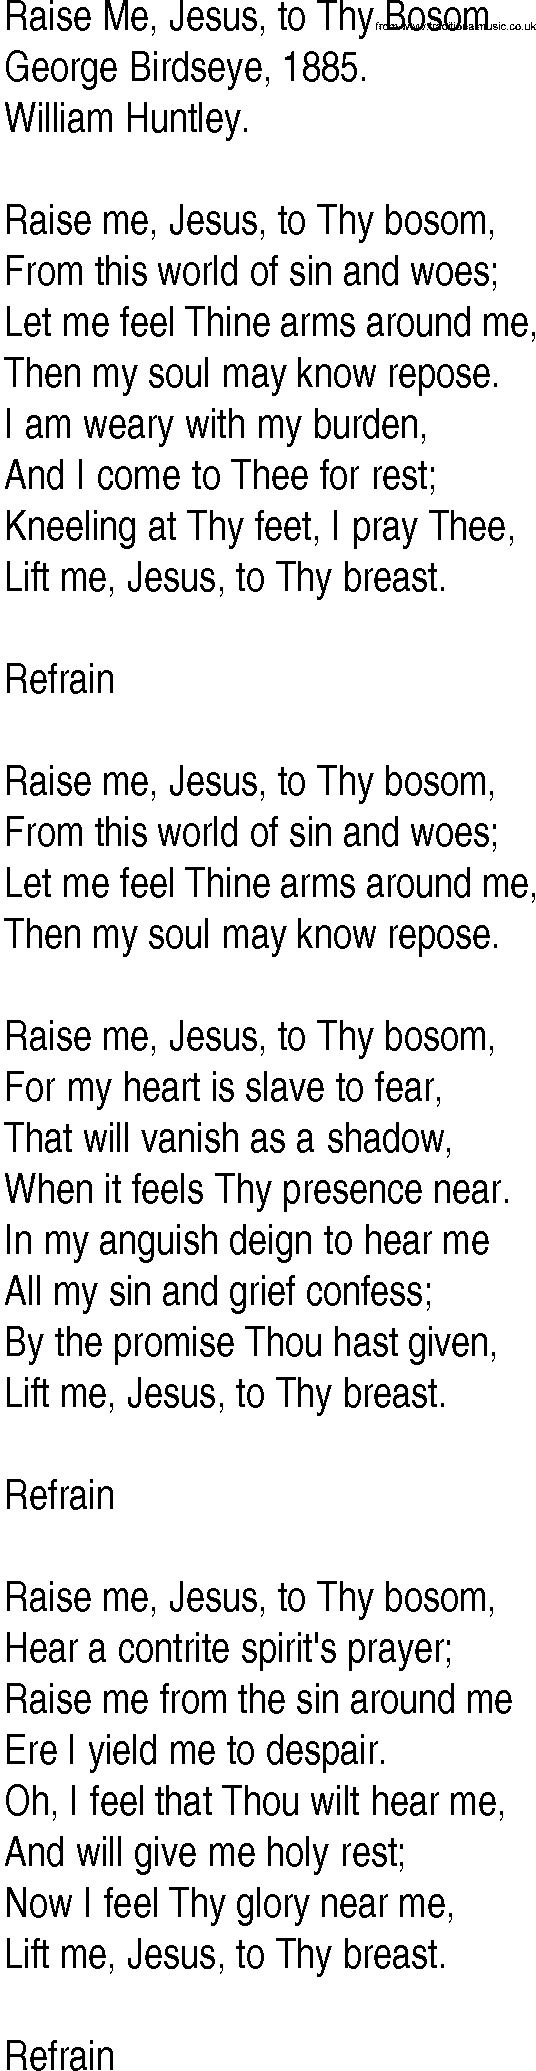 Hymn and Gospel Song: Raise Me, Jesus, to Thy Bosom by George Birdseye lyrics